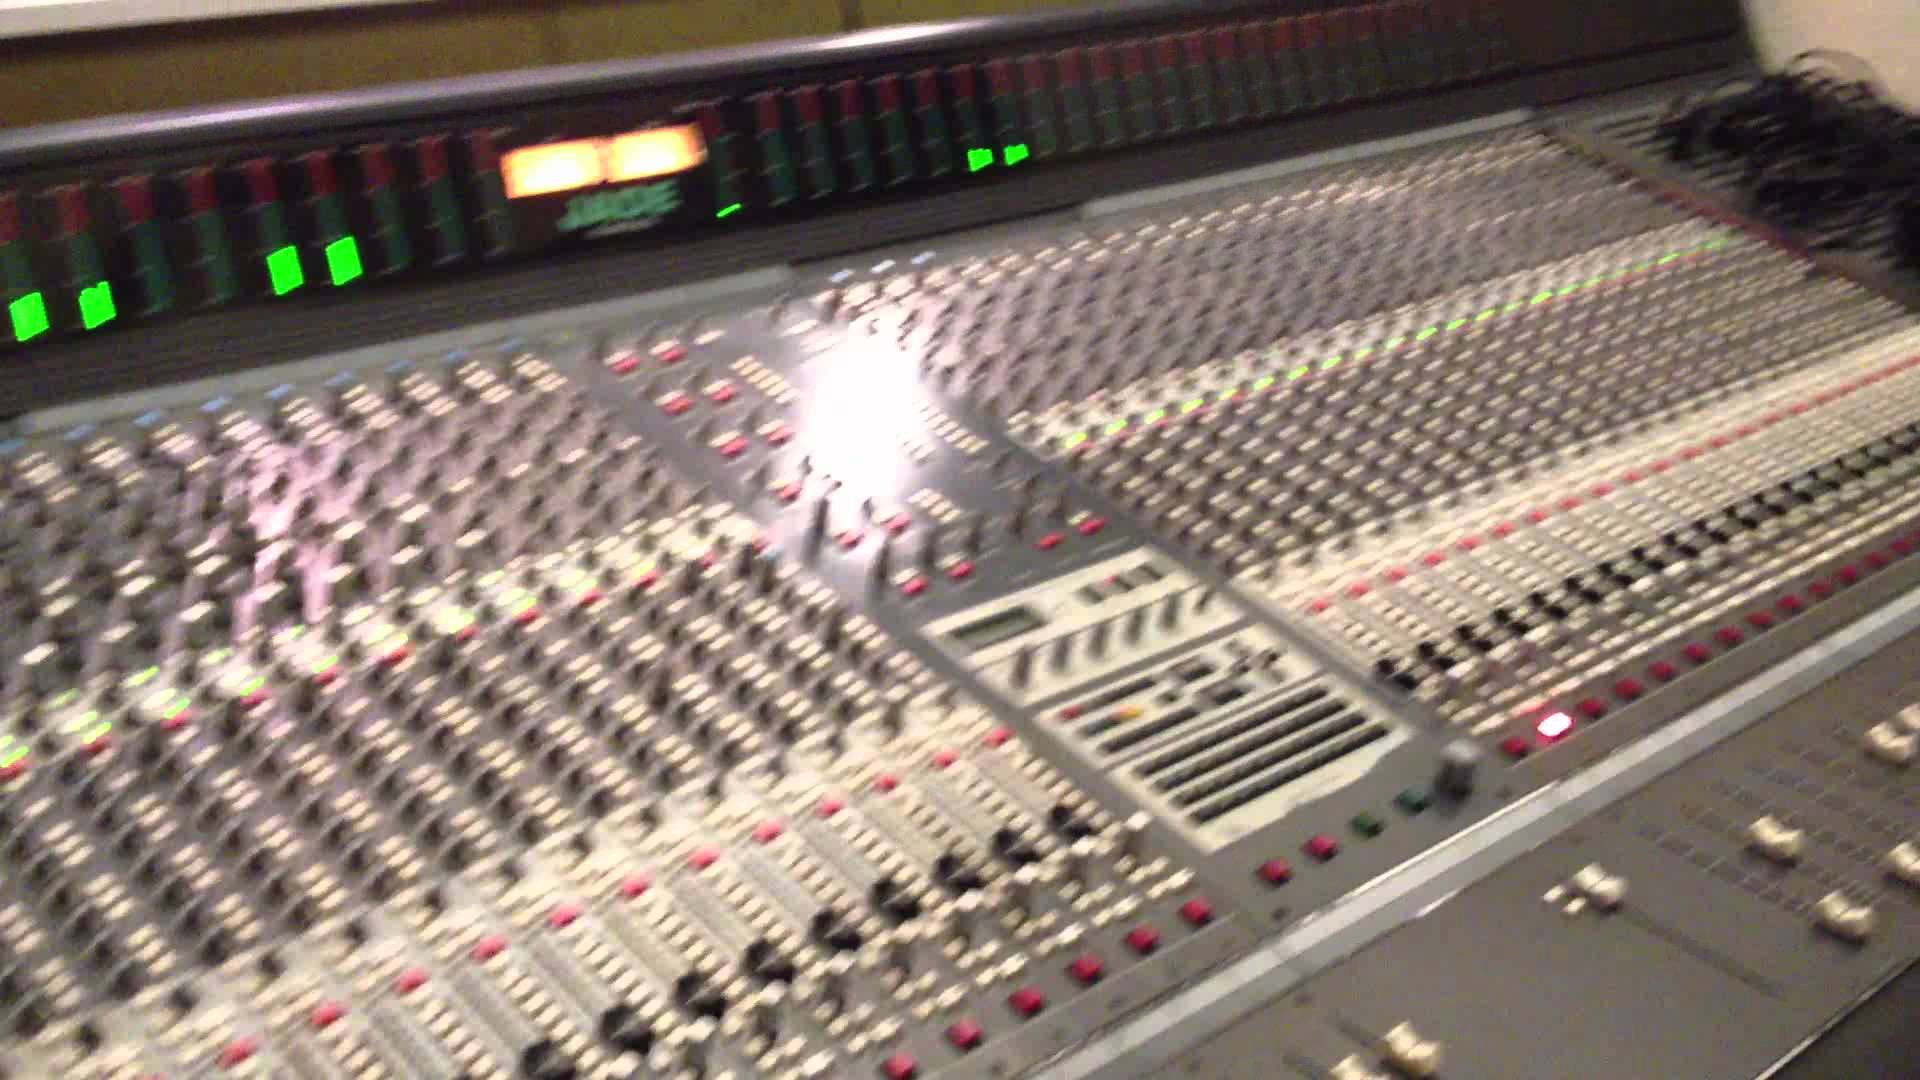 Recording studio soundtracs jade mixing console - YouTube